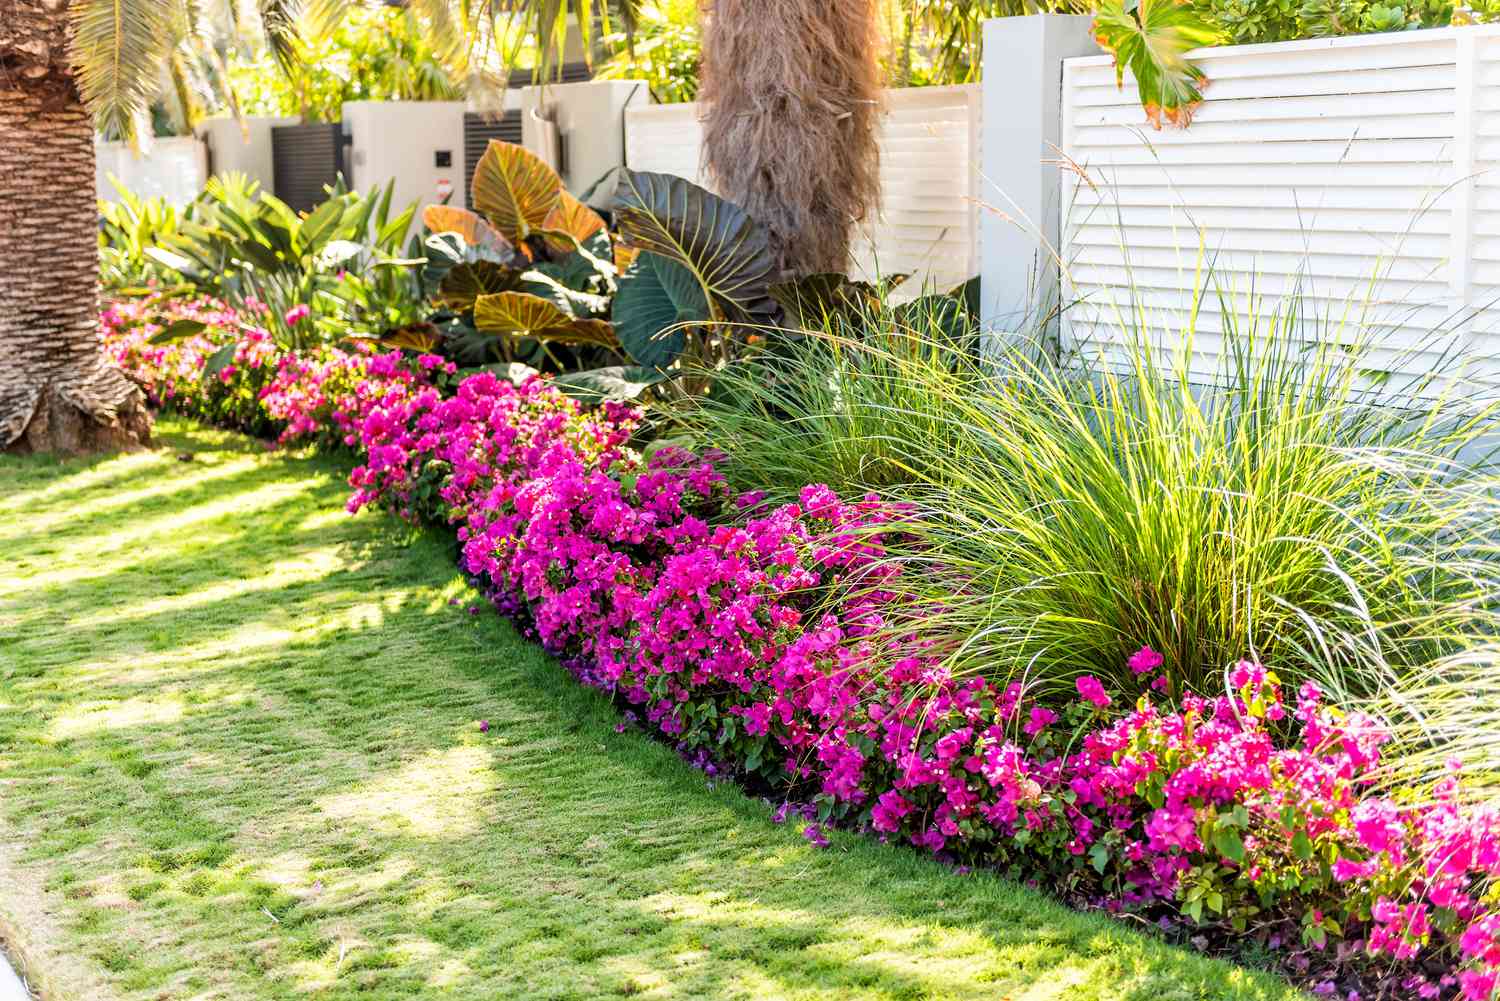 Vibrant pink bougainvillea flowers in Florida Keys or Miami, green plants landscaping lining sidewalk street road house entrance gate door during summer